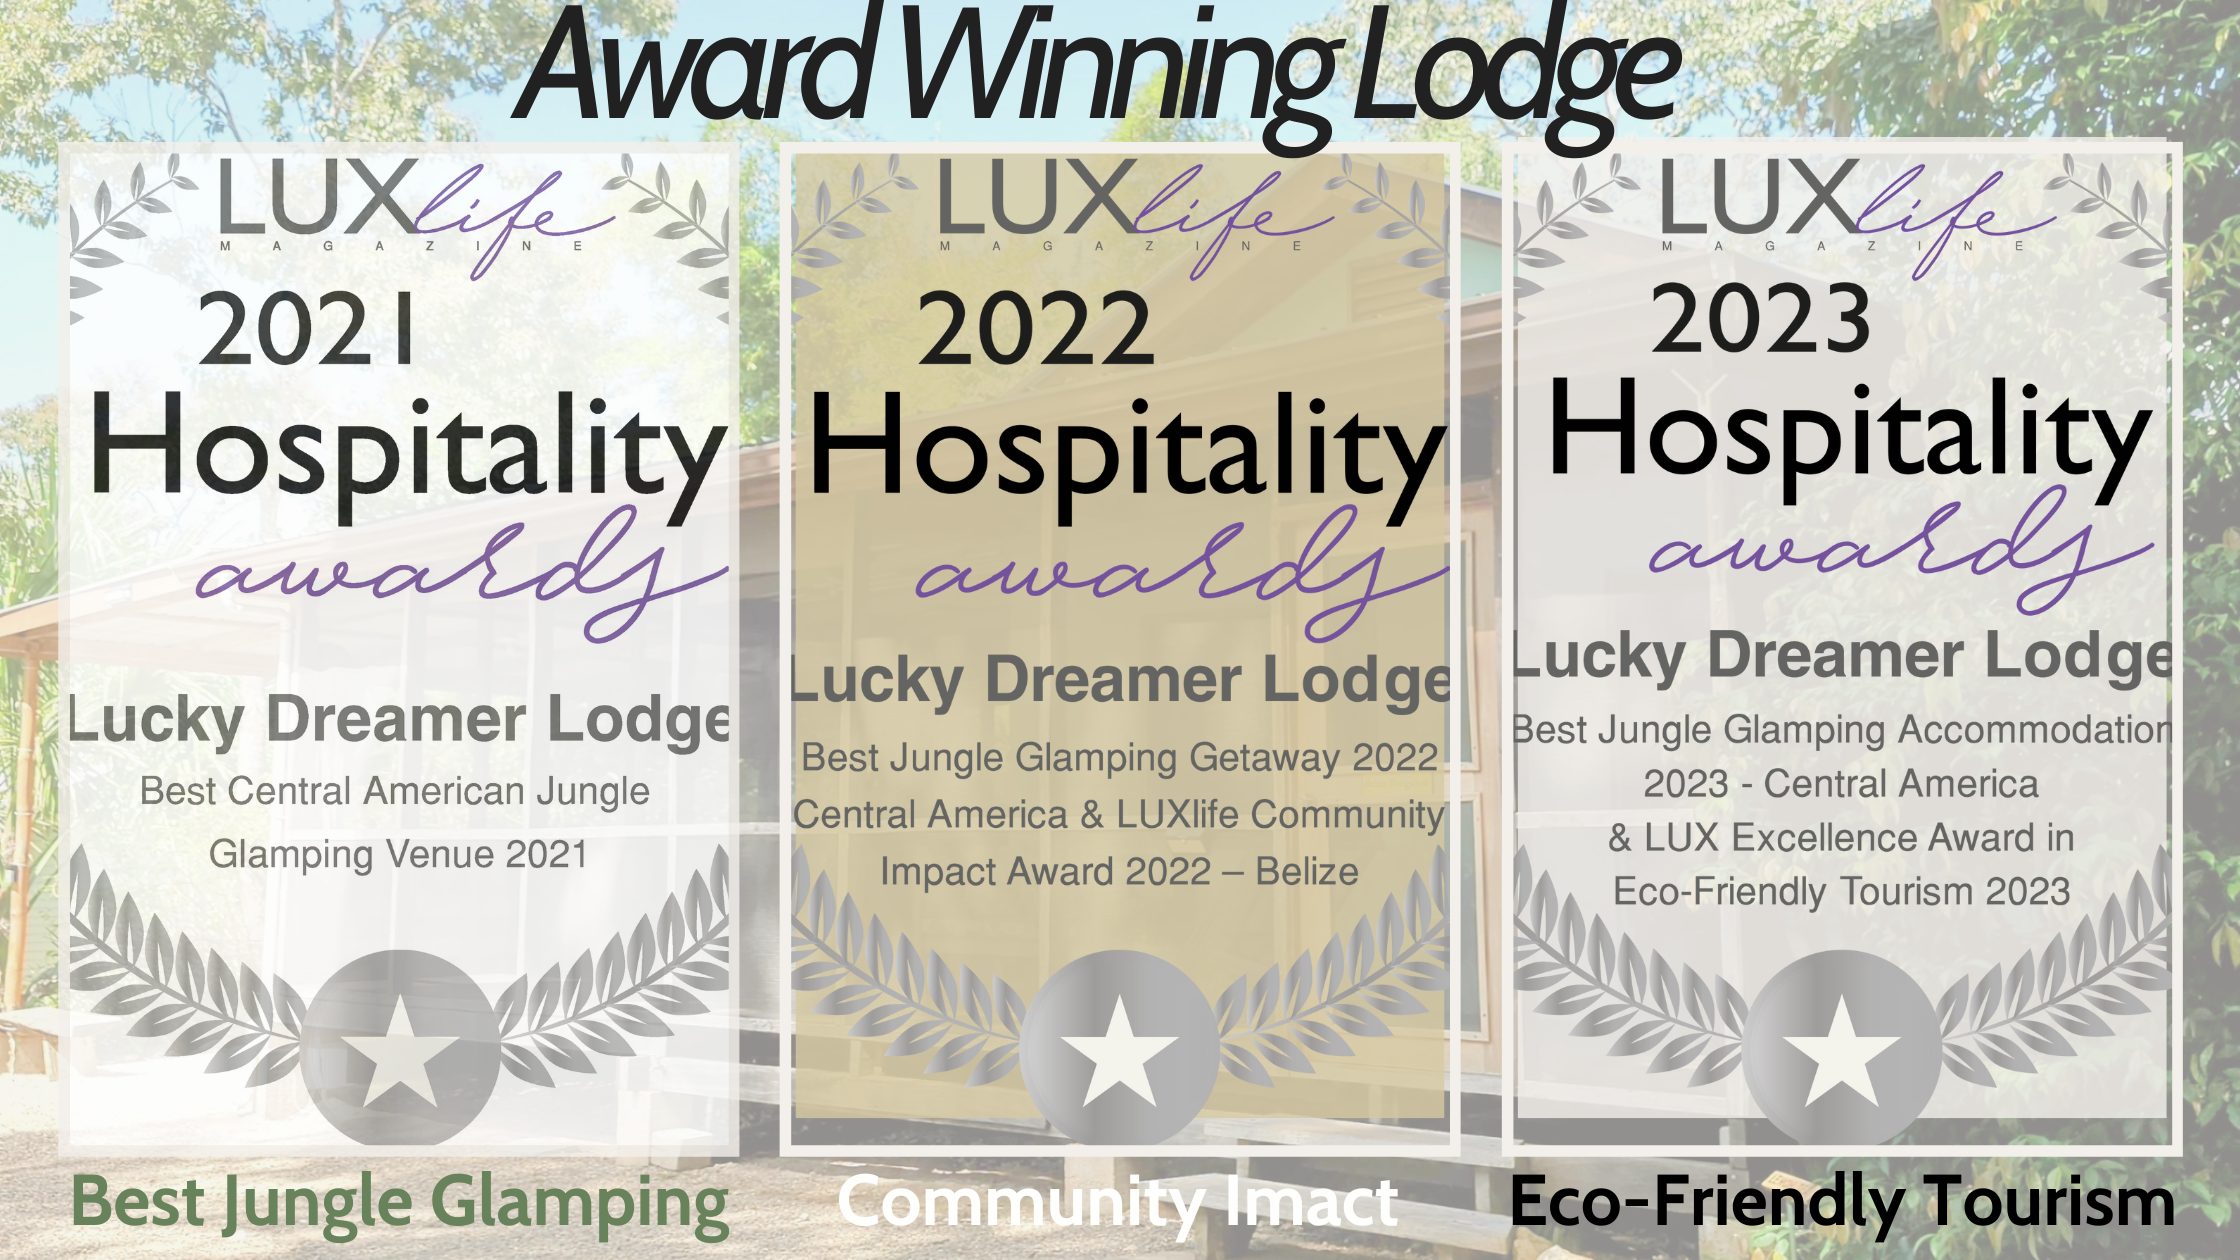 Banner with 3 lodge award logos